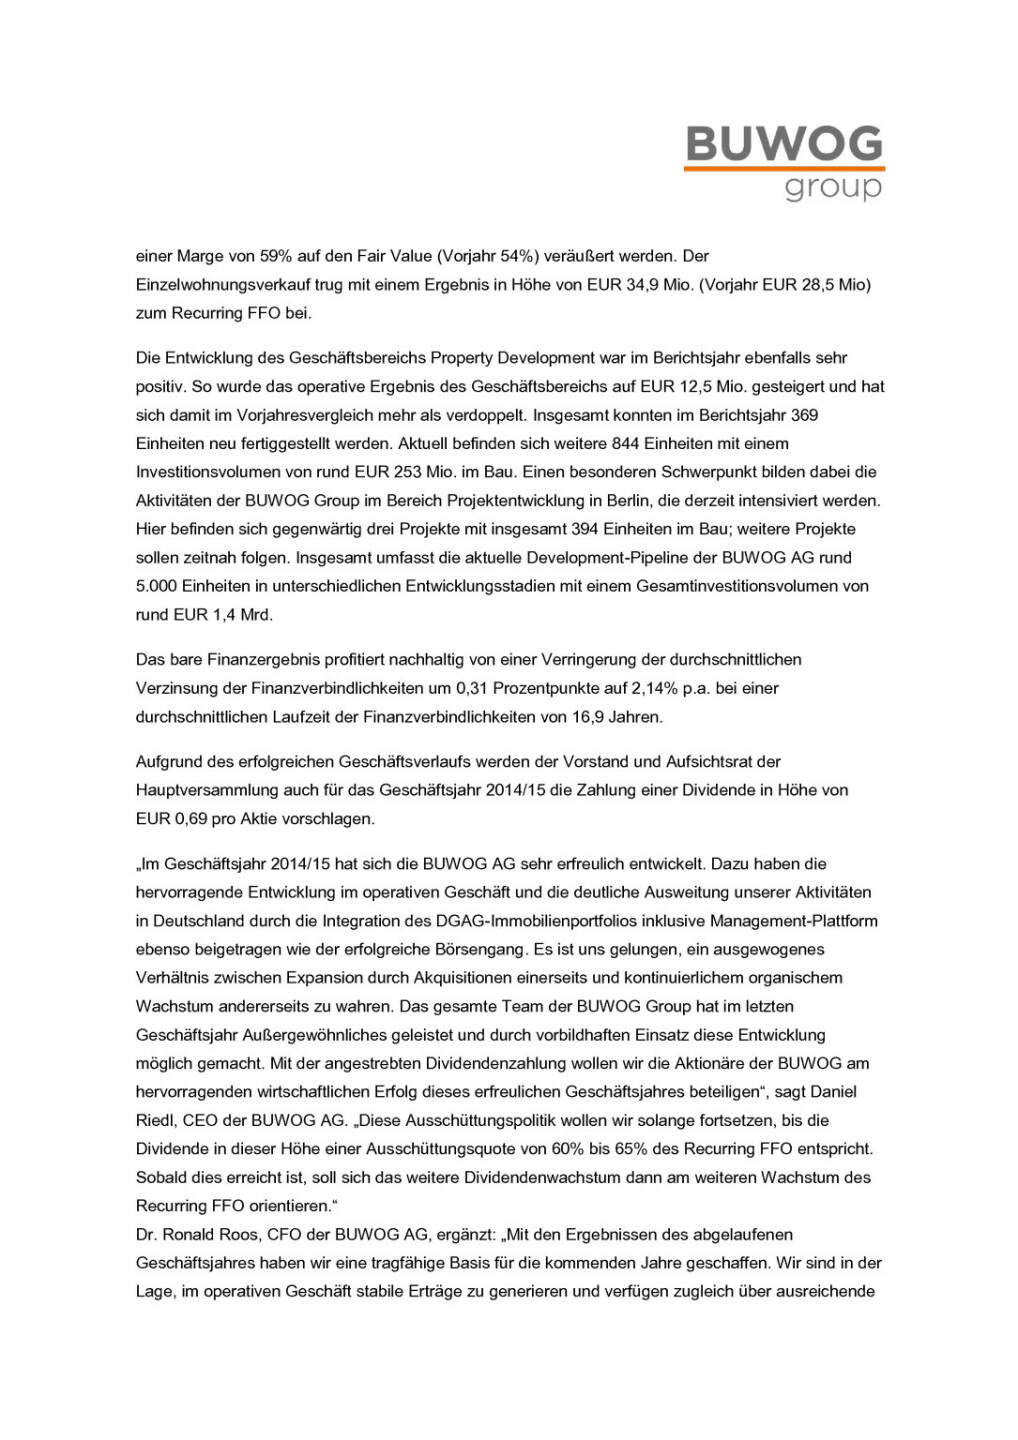 Buwog AG: Ergebnisse Geschäftsjahr 2014/15, Seite 2/4, komplettes Dokument unter http://boerse-social.com/static/uploads/file_334_buwog_ag_ergebnisse_geschäftsjahr_201415.pdf